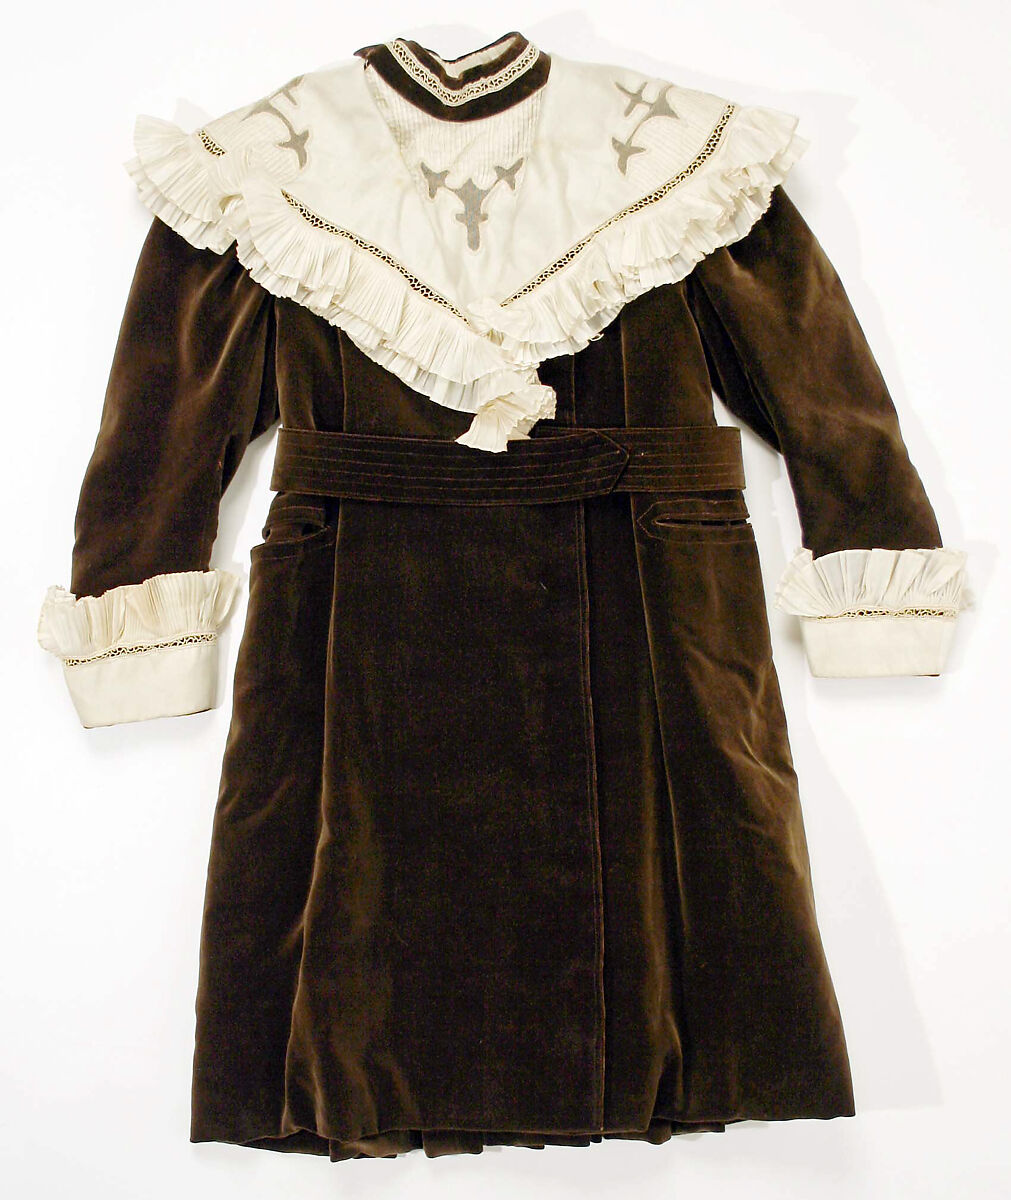 Coat, silk, American or European 